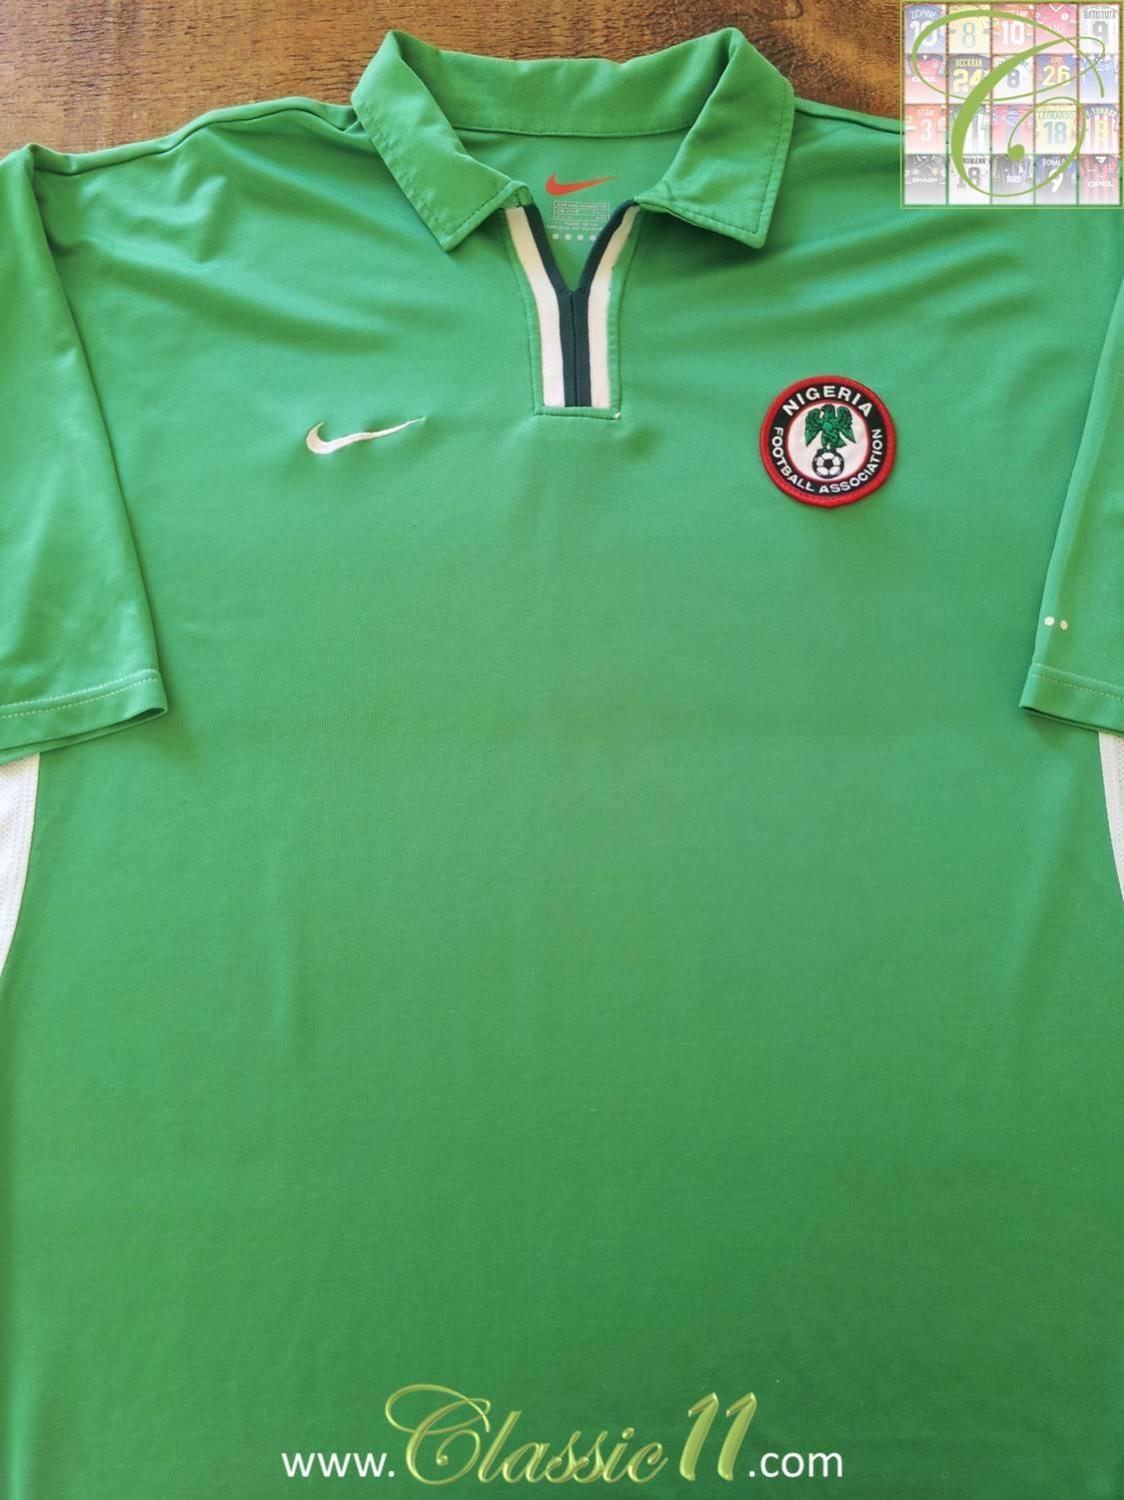 maillot nigeria domicile 2000-2002 rétro